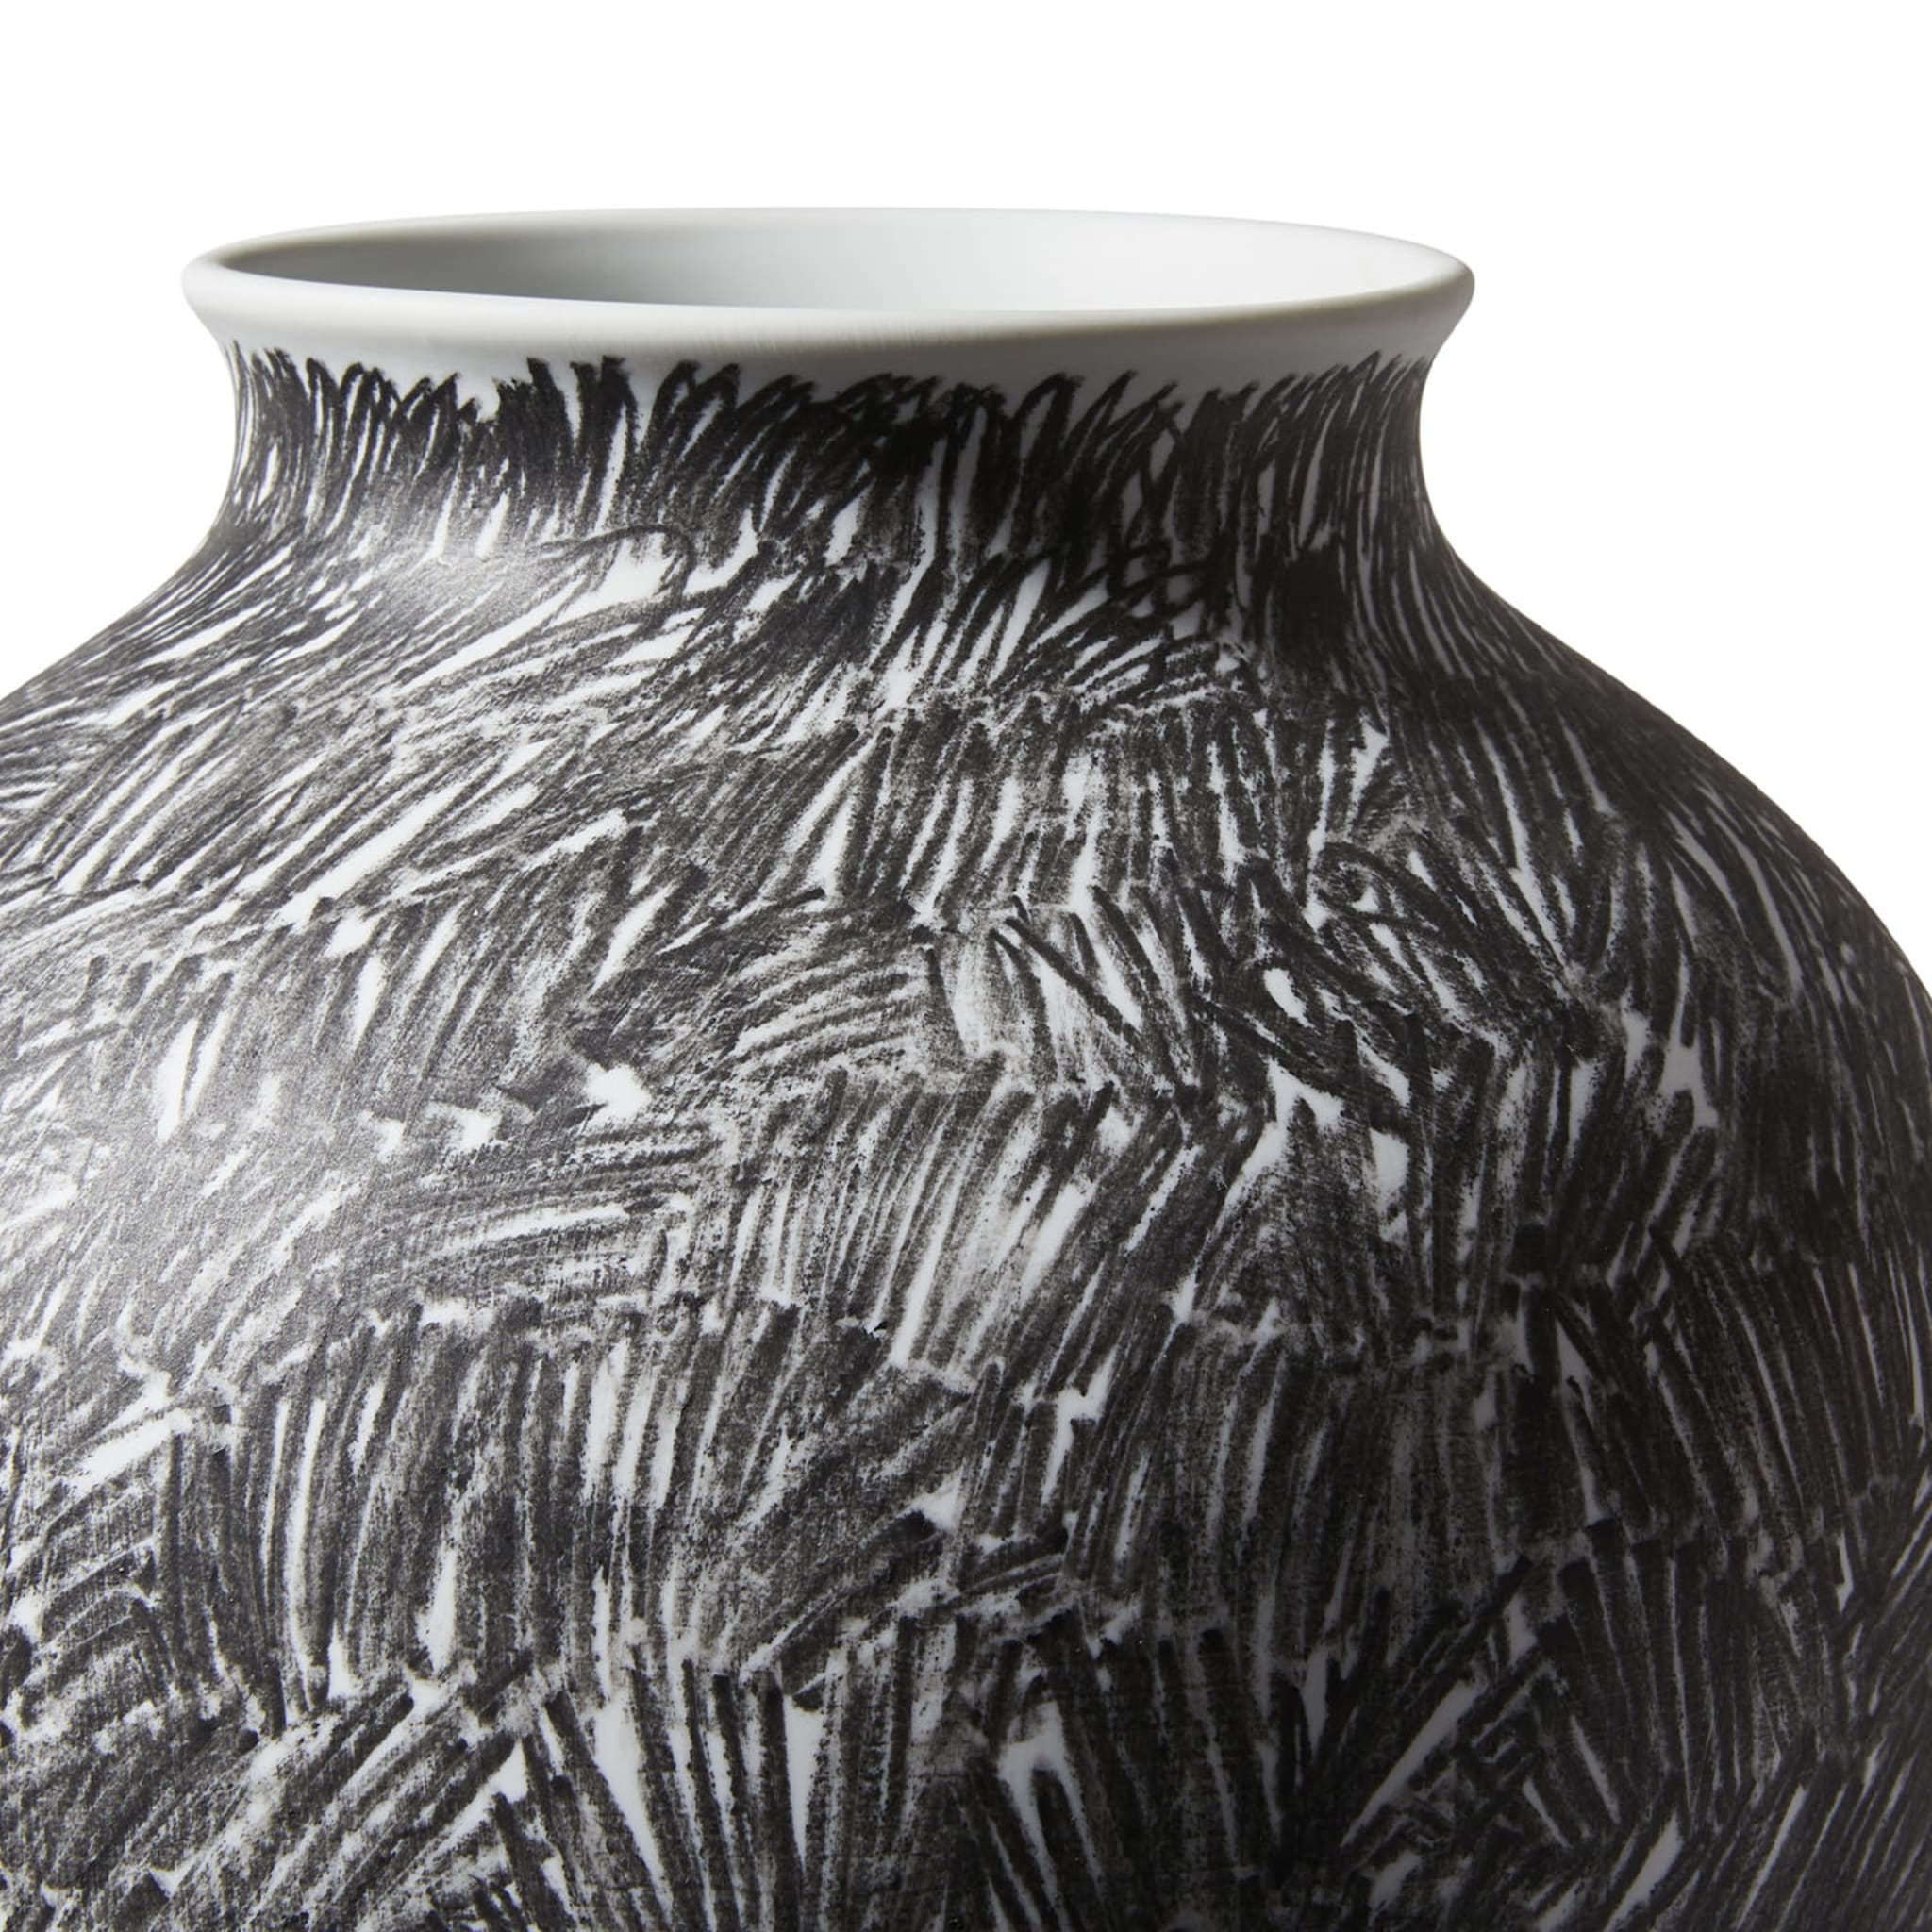 Post Scriptum Black & White Bulging Vase by Formafantasma #1 - Alternative view 1